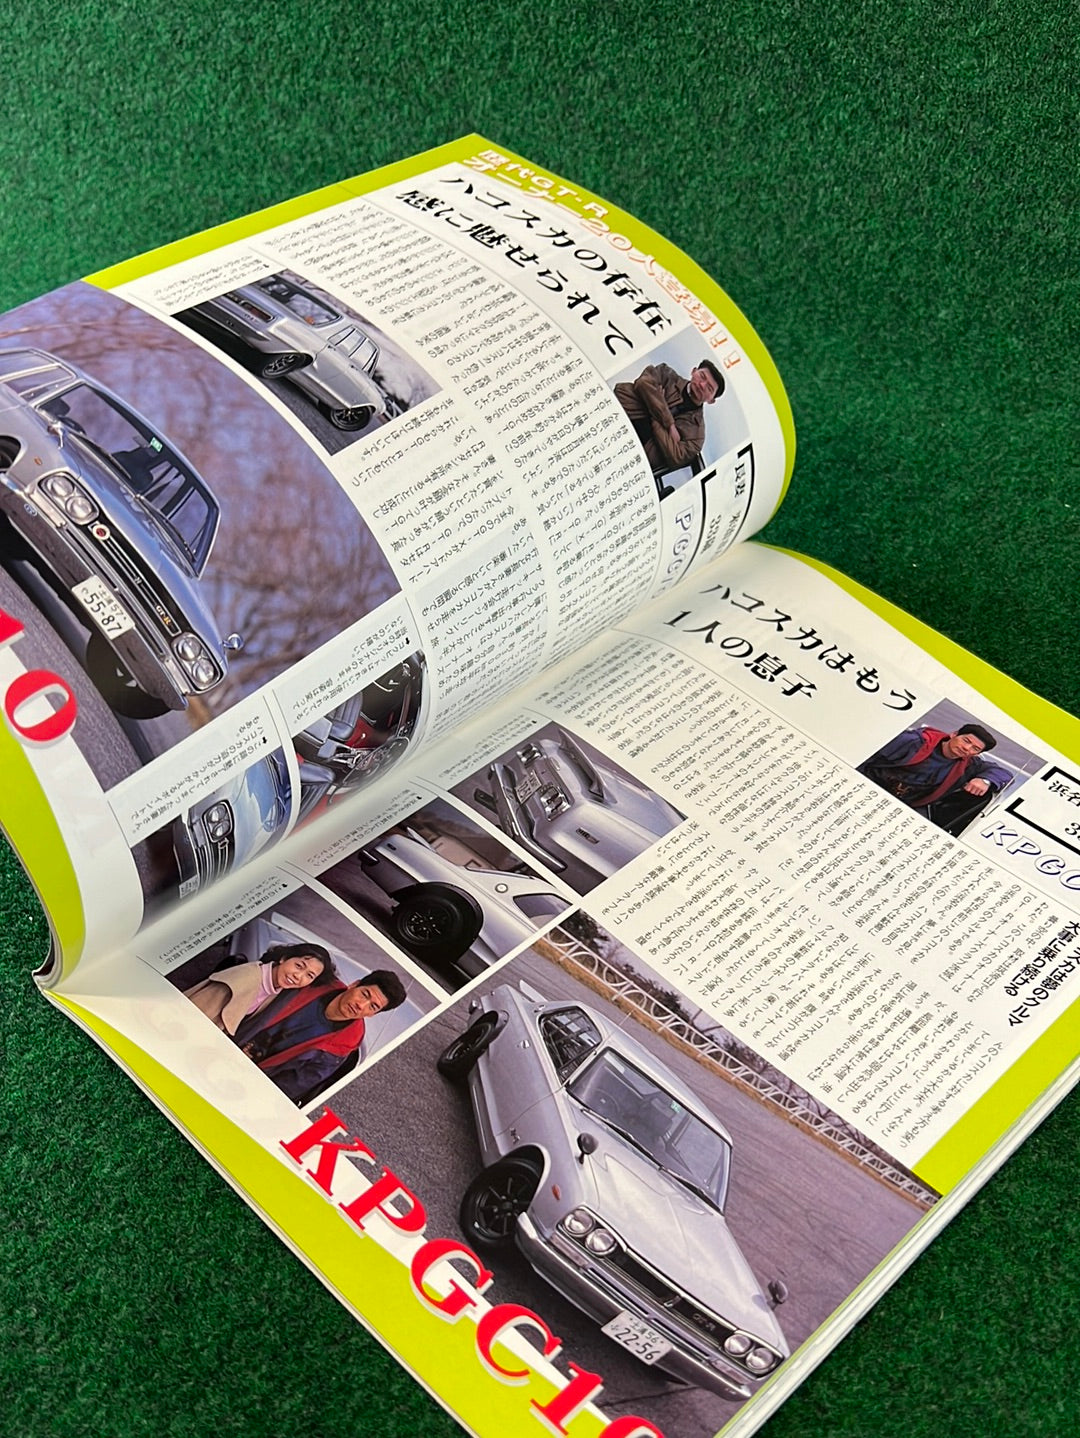 GT-R Club Magazine - Vol. 28